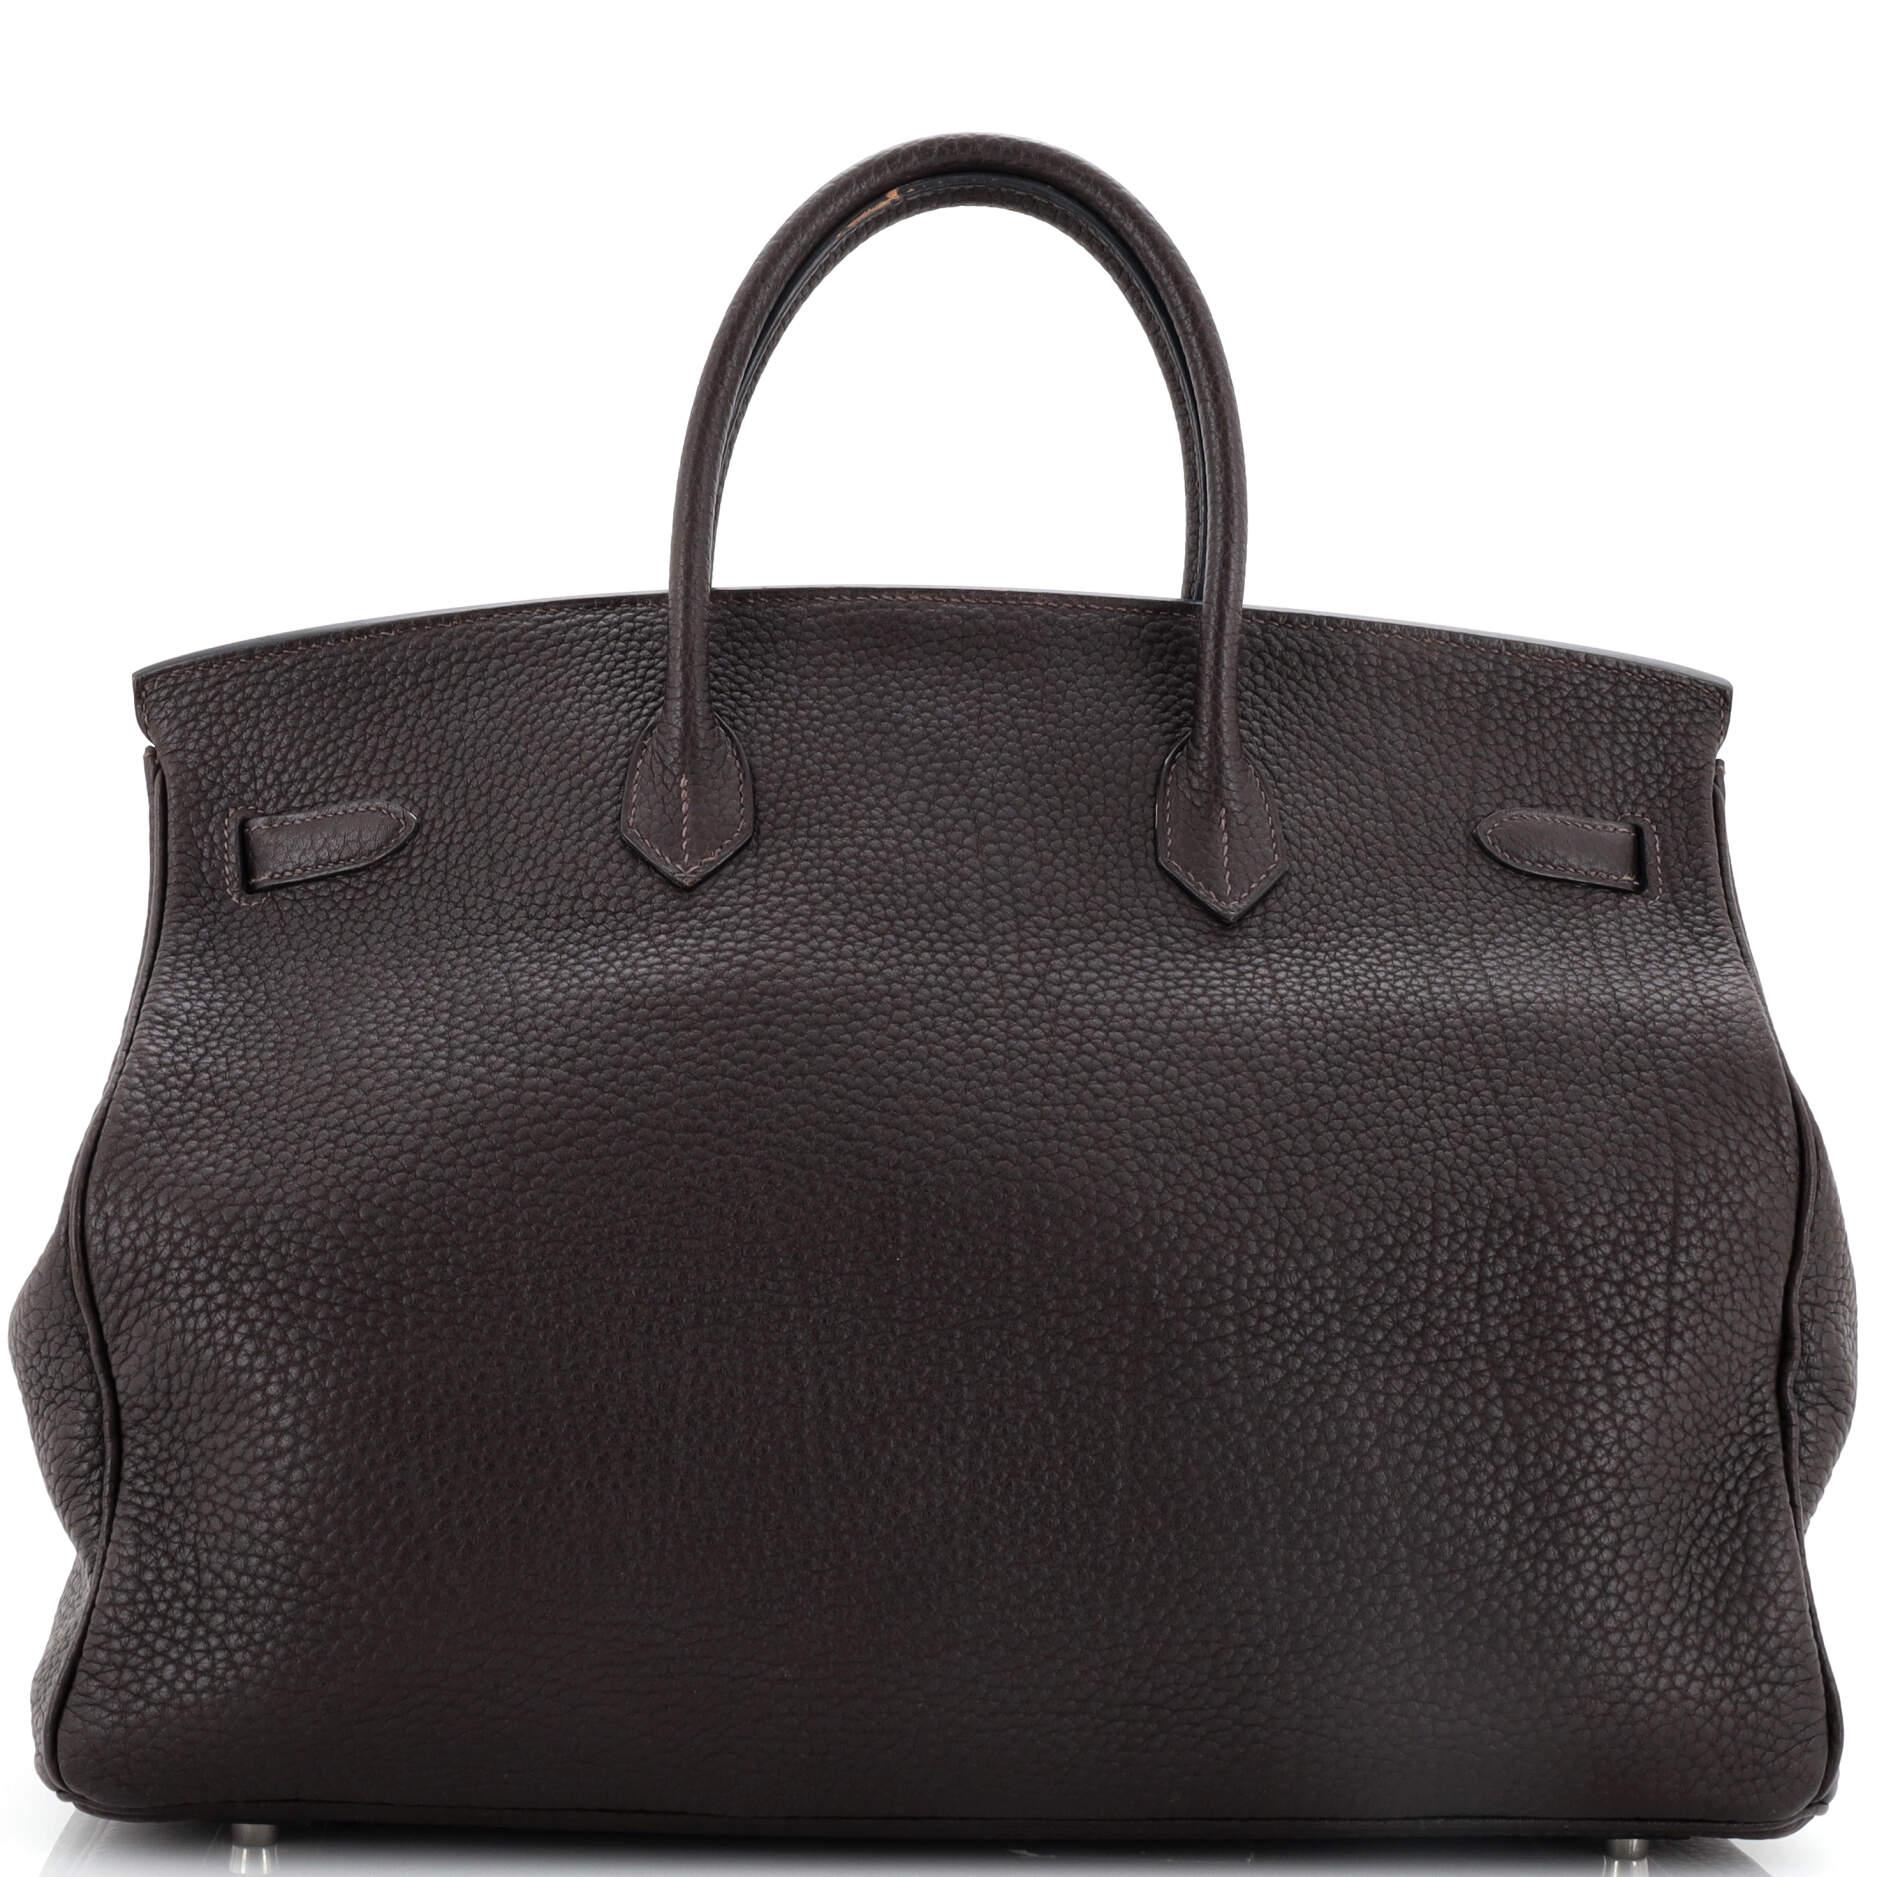 Women's or Men's Hermes Birkin Handbag Chocolate Togo with Palladium Hardware 40